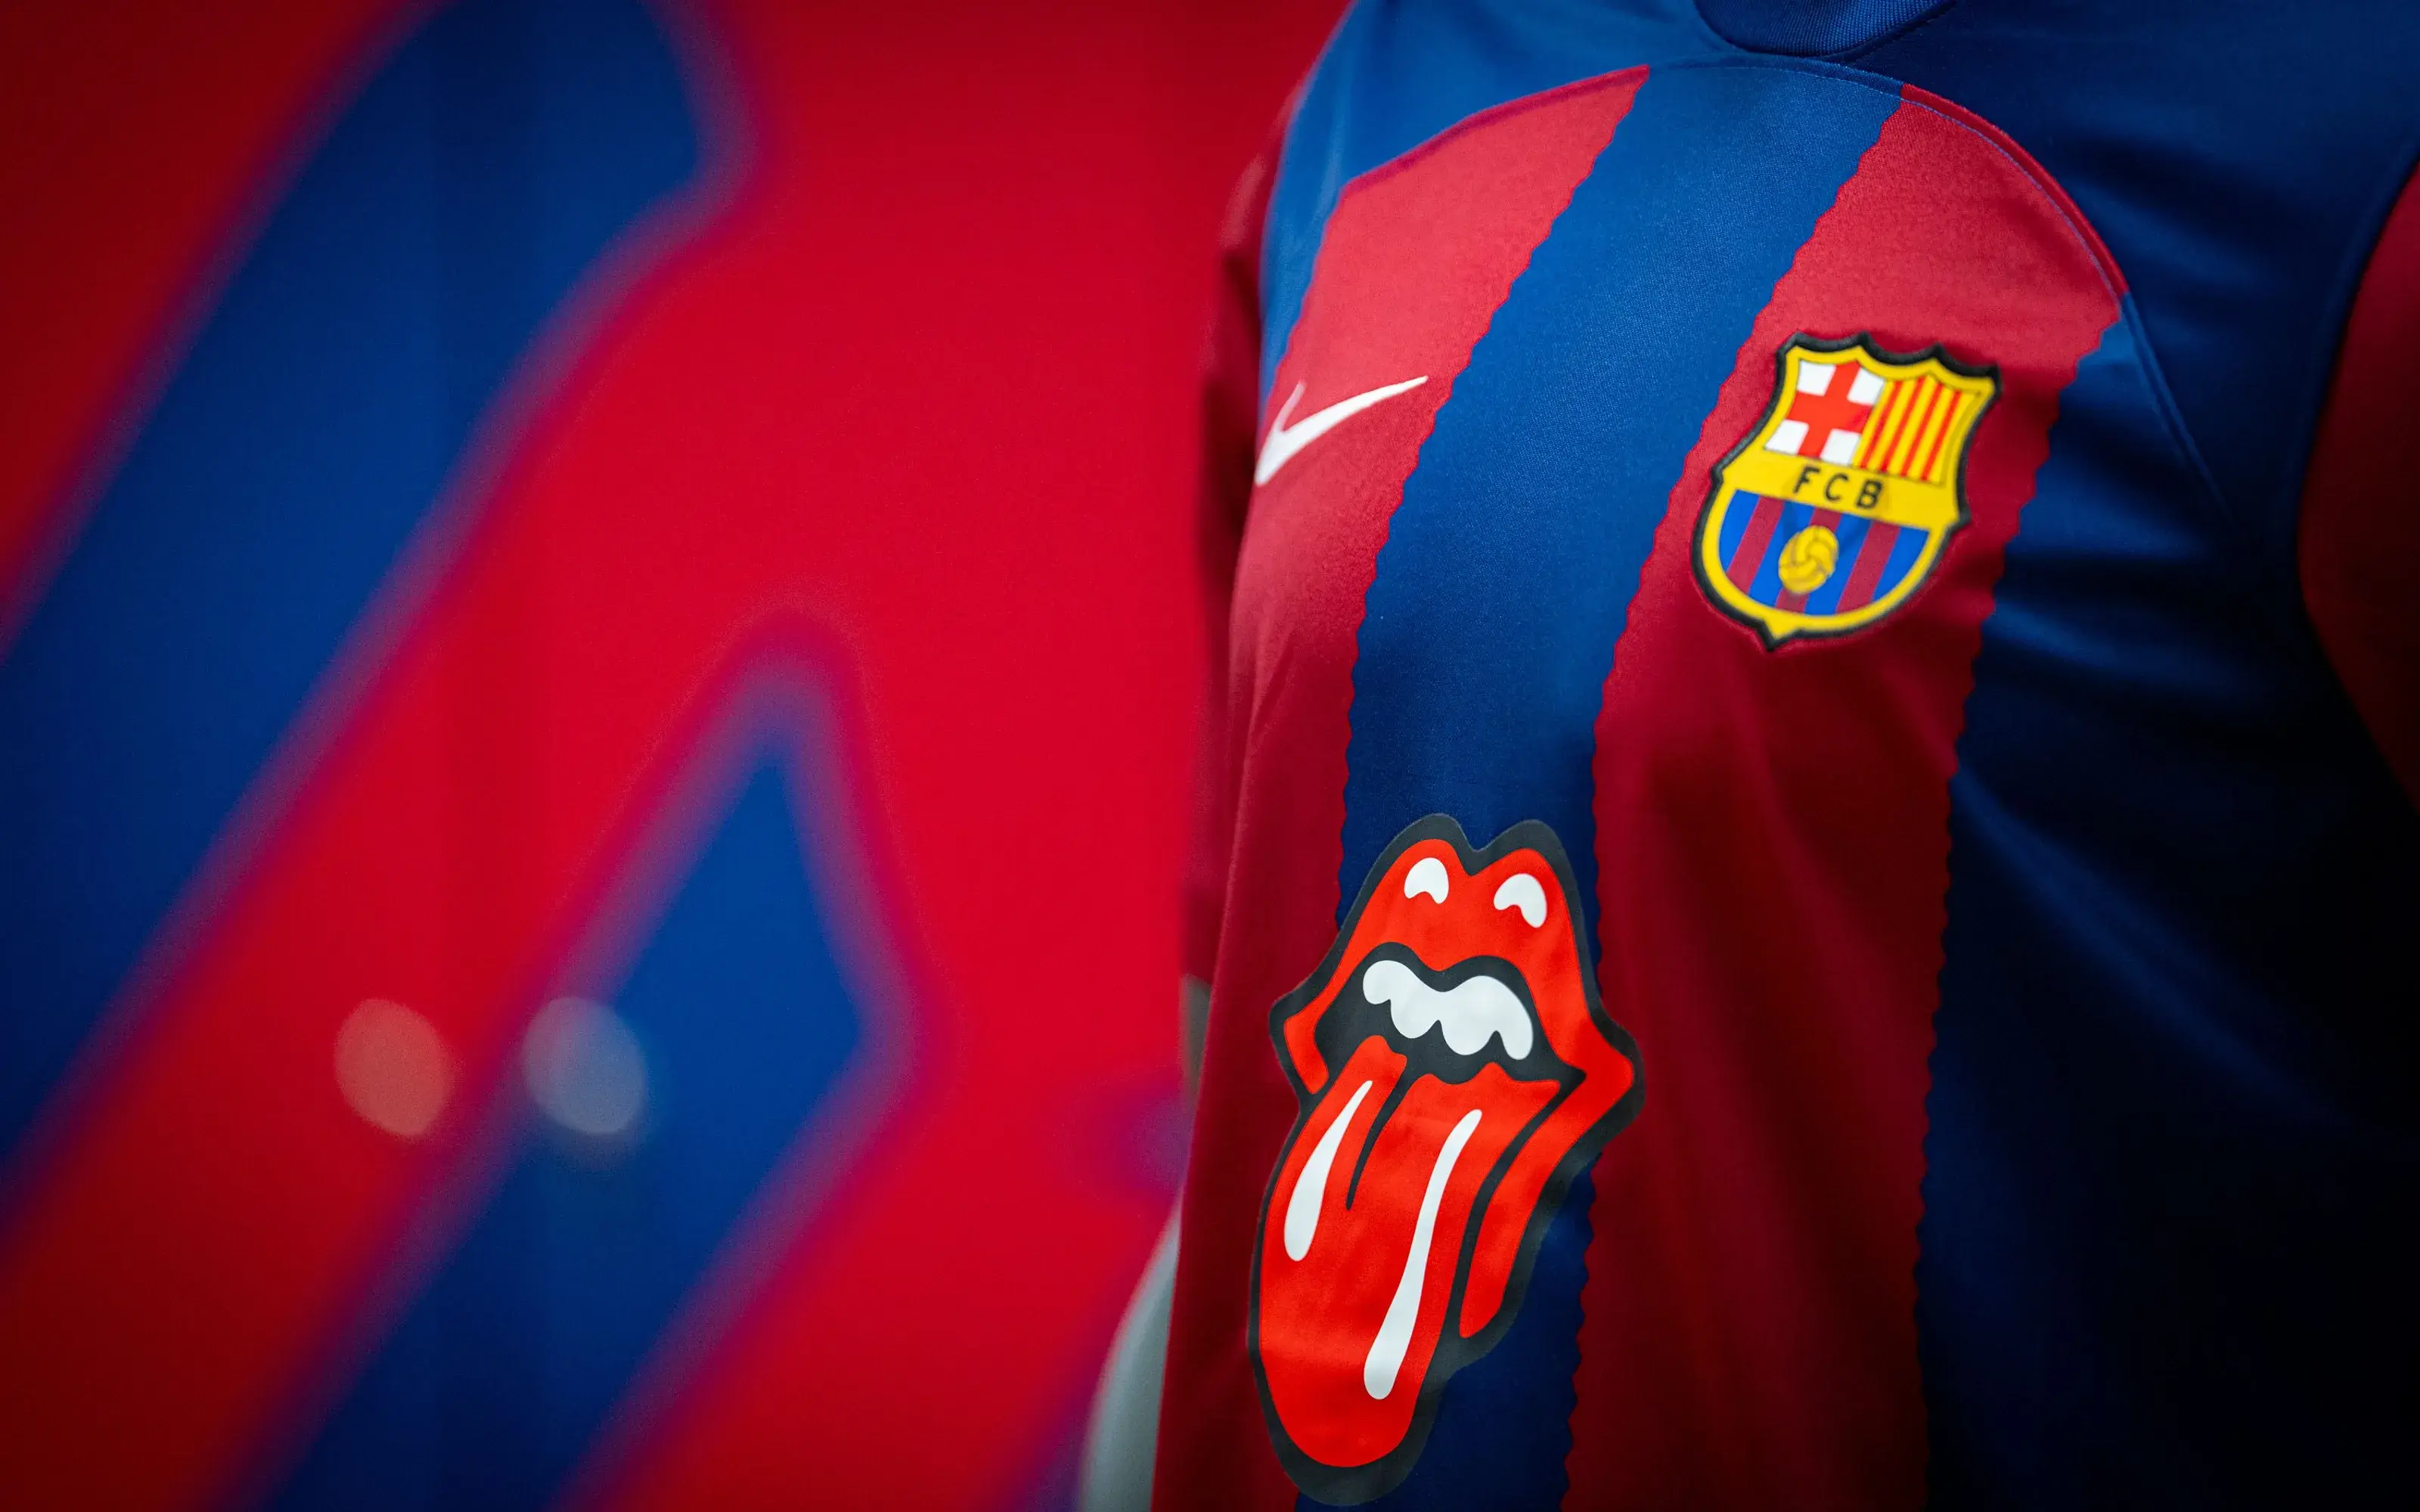 FC Barcelona x The Rolling Stones logo